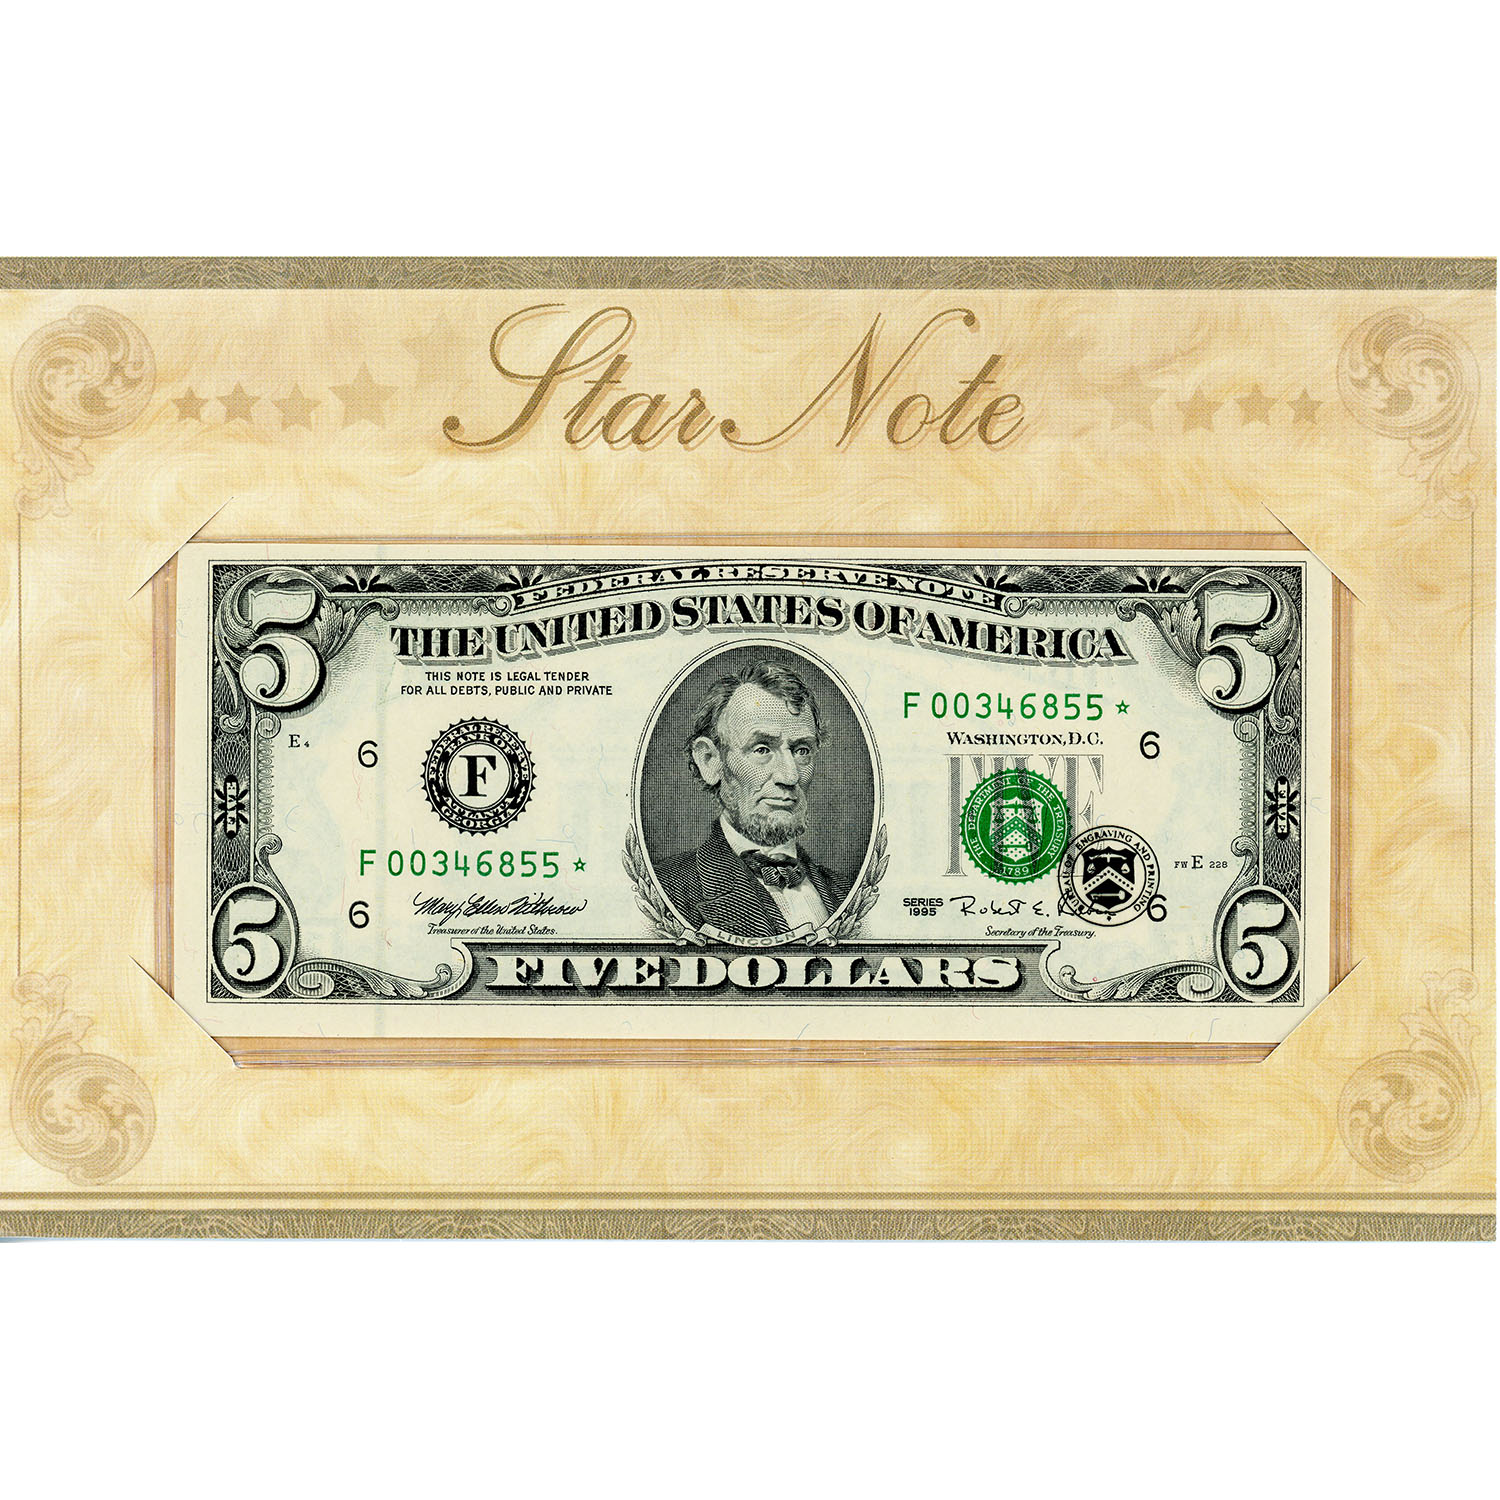 Auto Bank $5 TYPE 2 ASTON MARTIN fantasy private test specimen banknote 